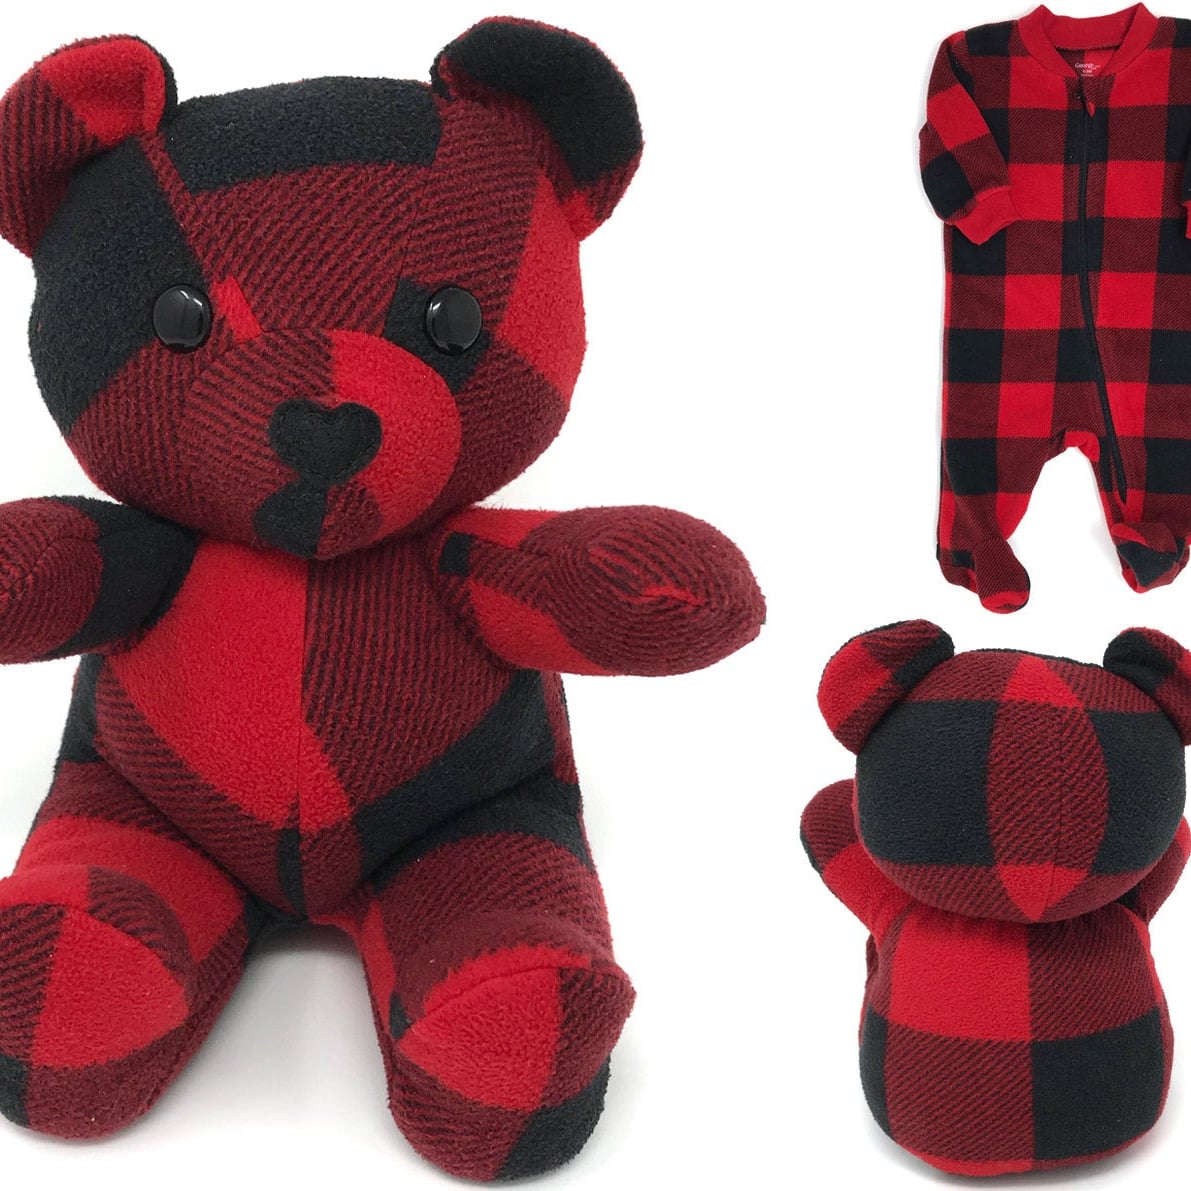 teddy bear made from onesie